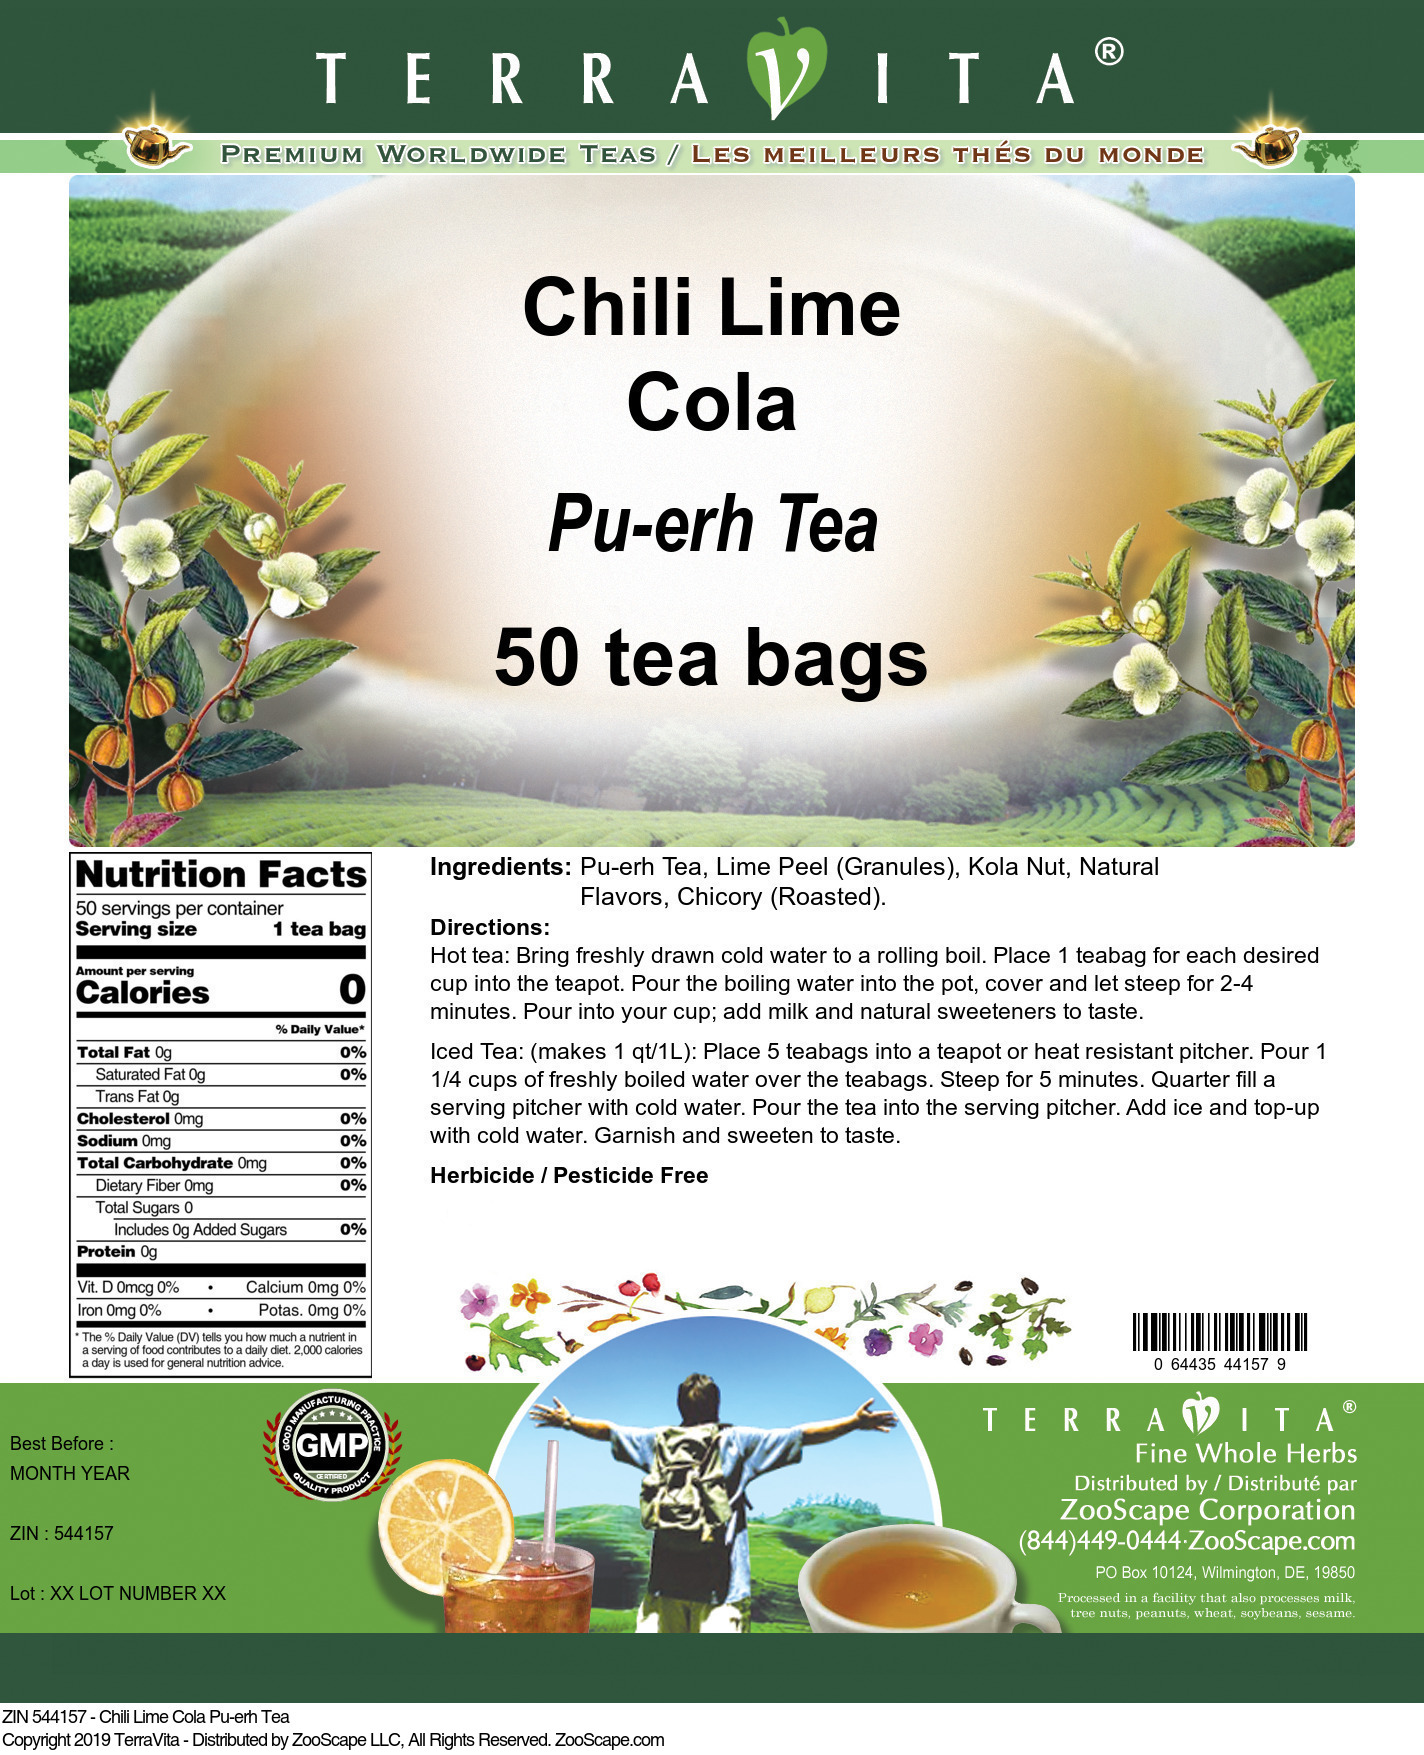 Chili Lime Cola Pu-erh Tea - Label